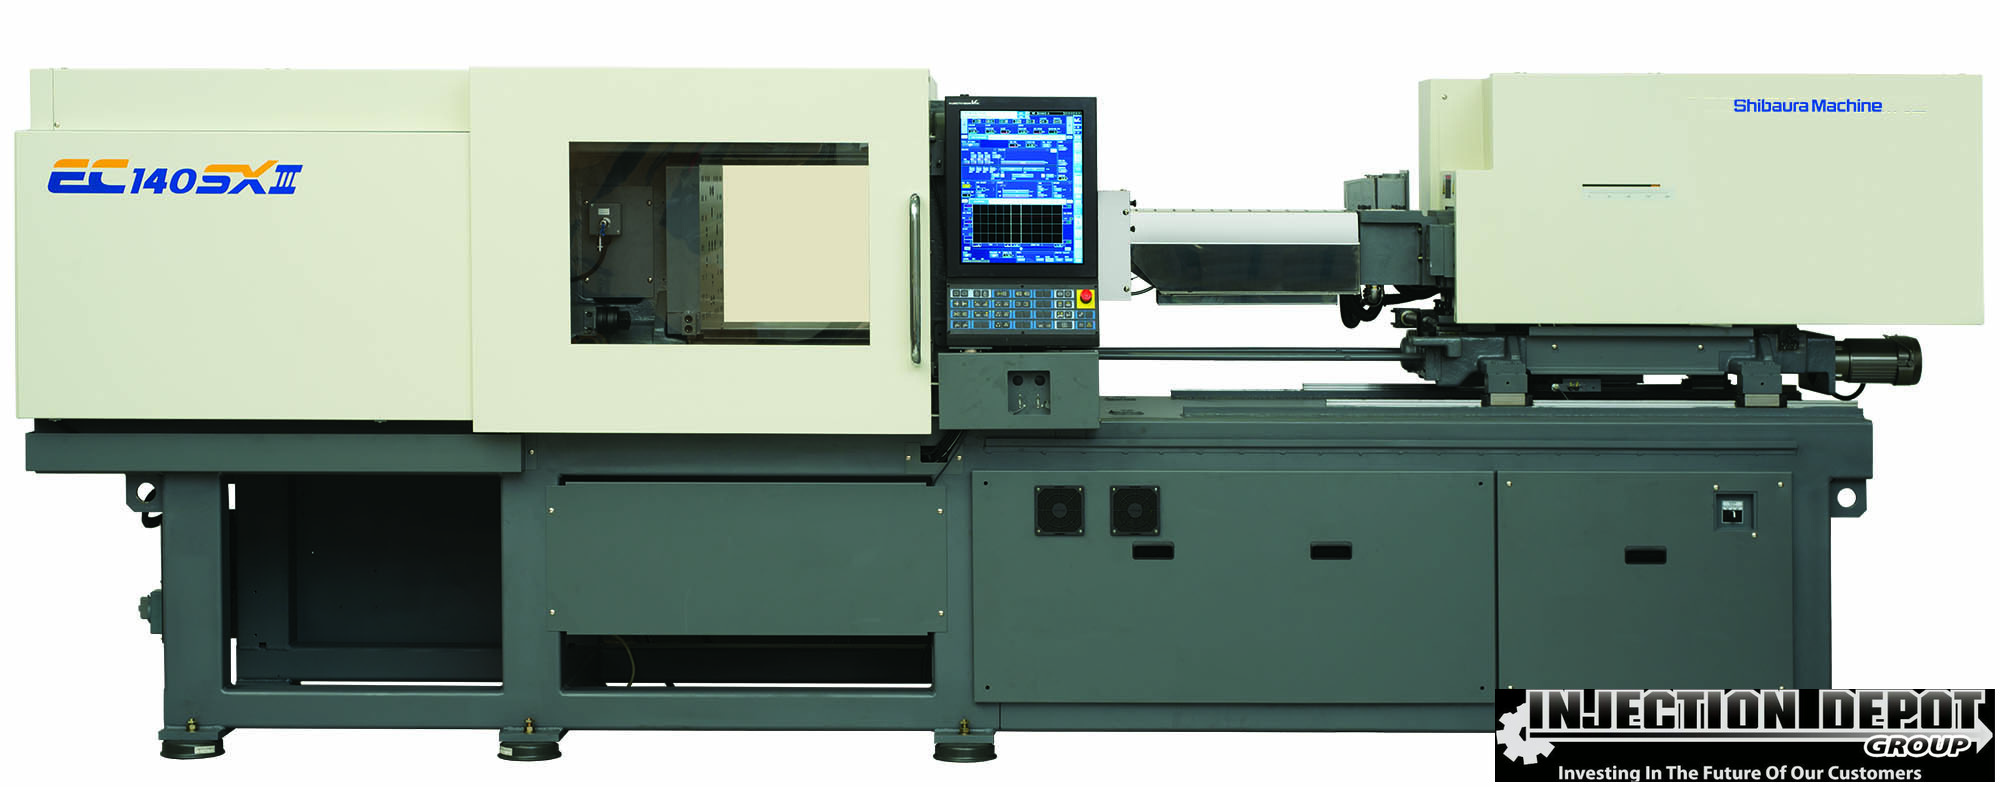 SHIBAURA MACHINE EC140SXIIIV70-U34 4Y Horizontal Injection Moulding Machines | INJECTION DEPOT GROUP